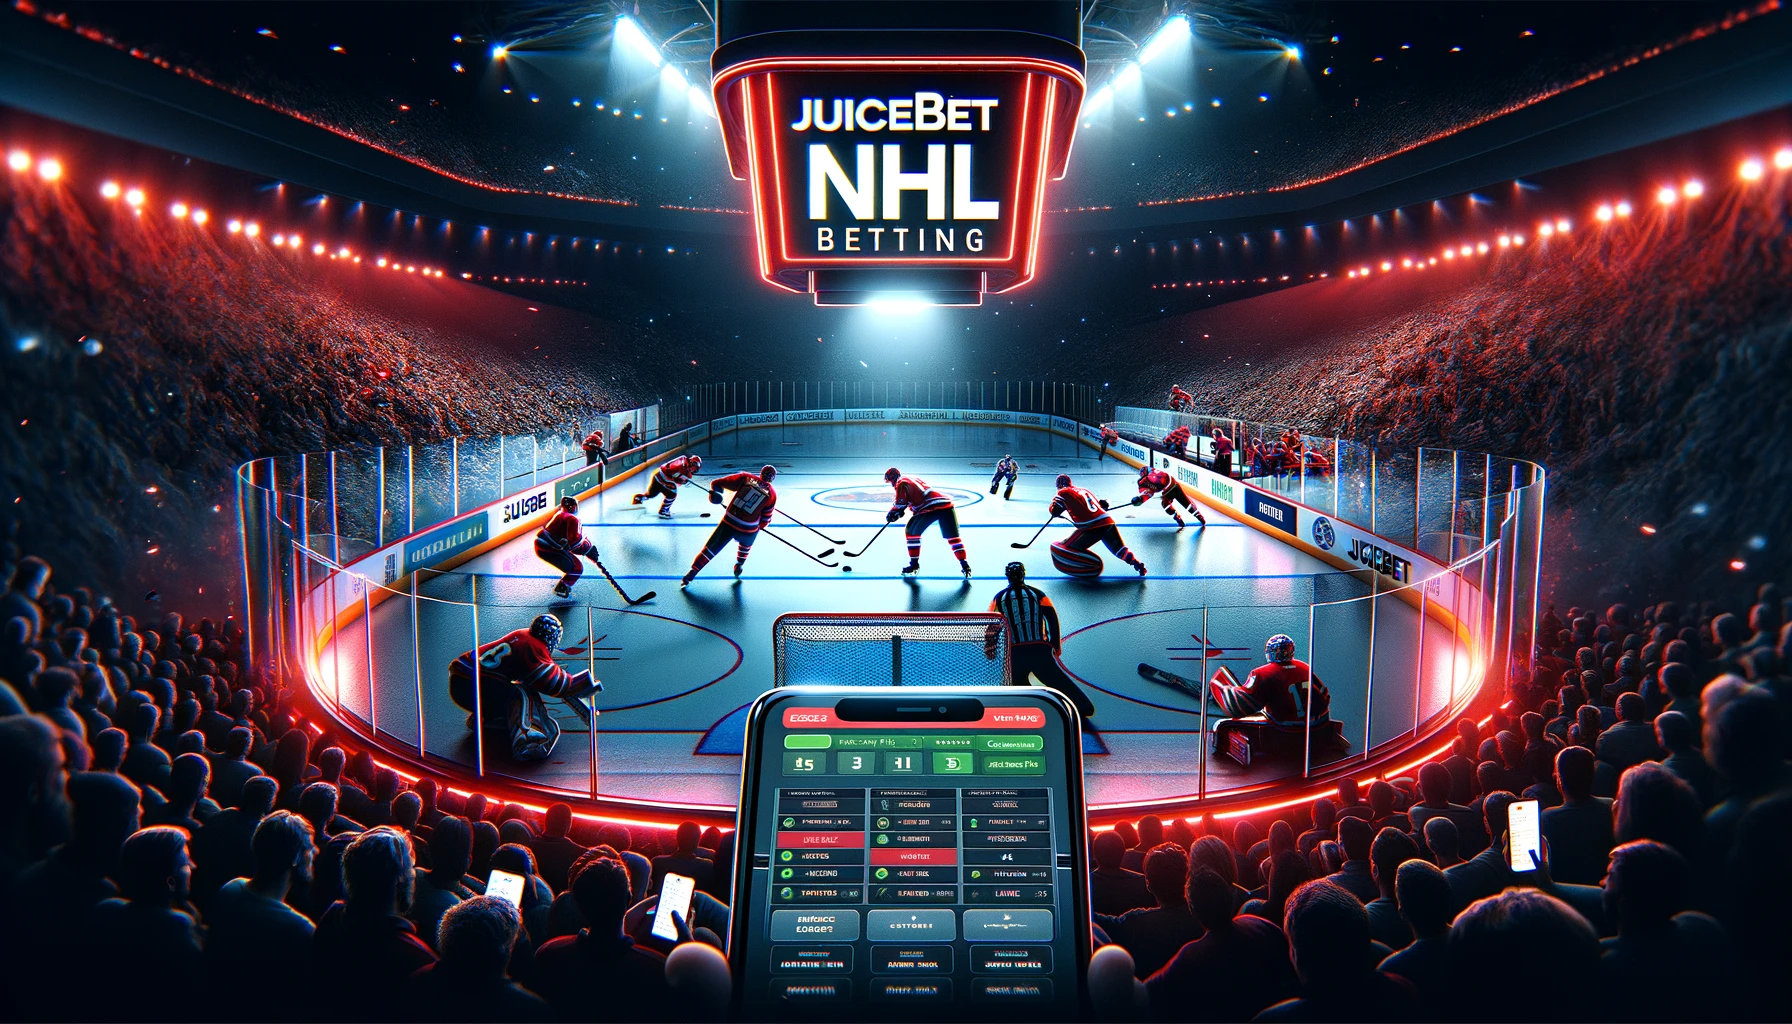 NHL betting with Juicebet